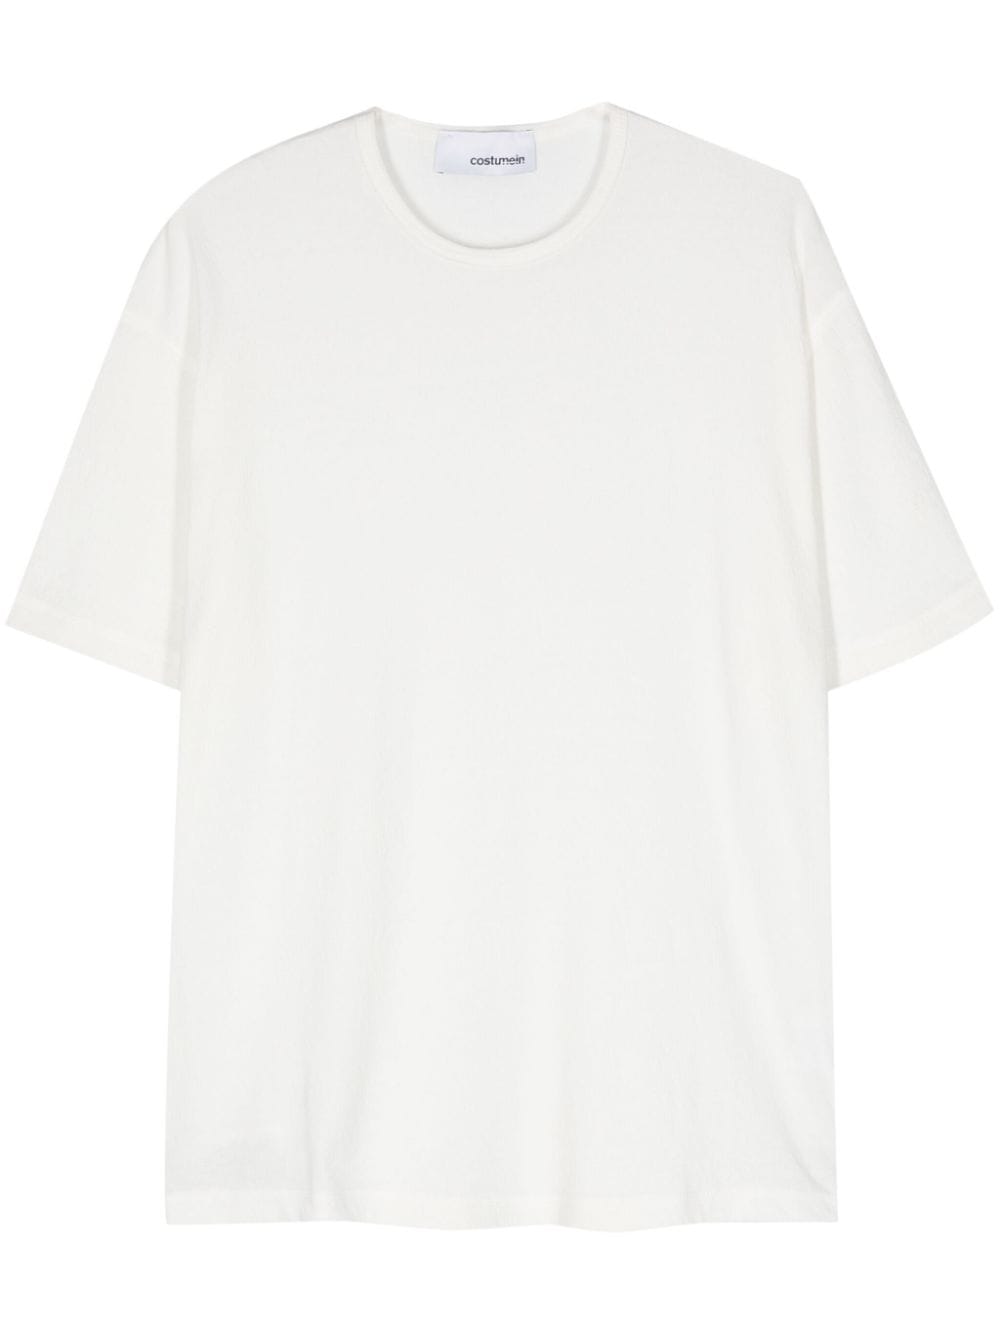 Costumein crepe cotton T-shirt - Bianco